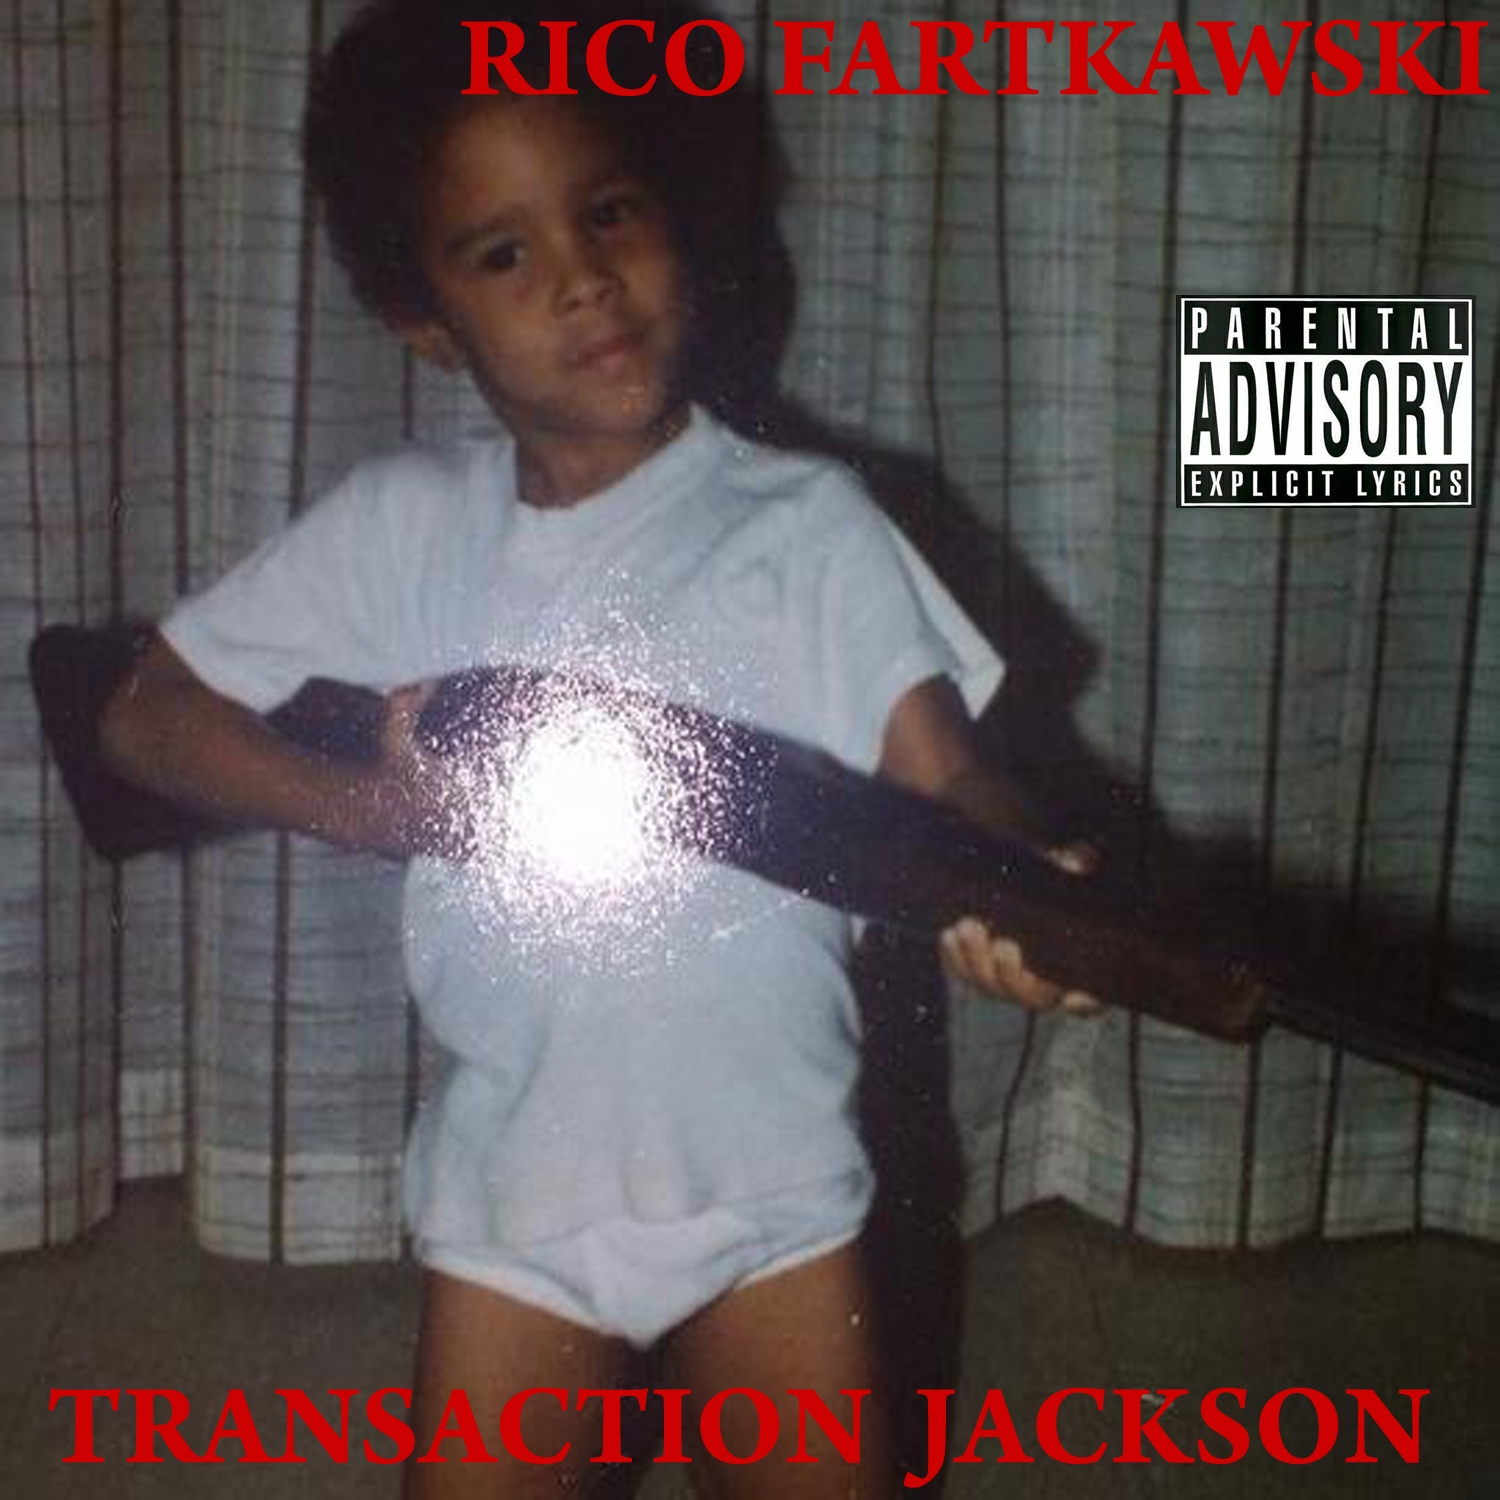 Transaction Jackson